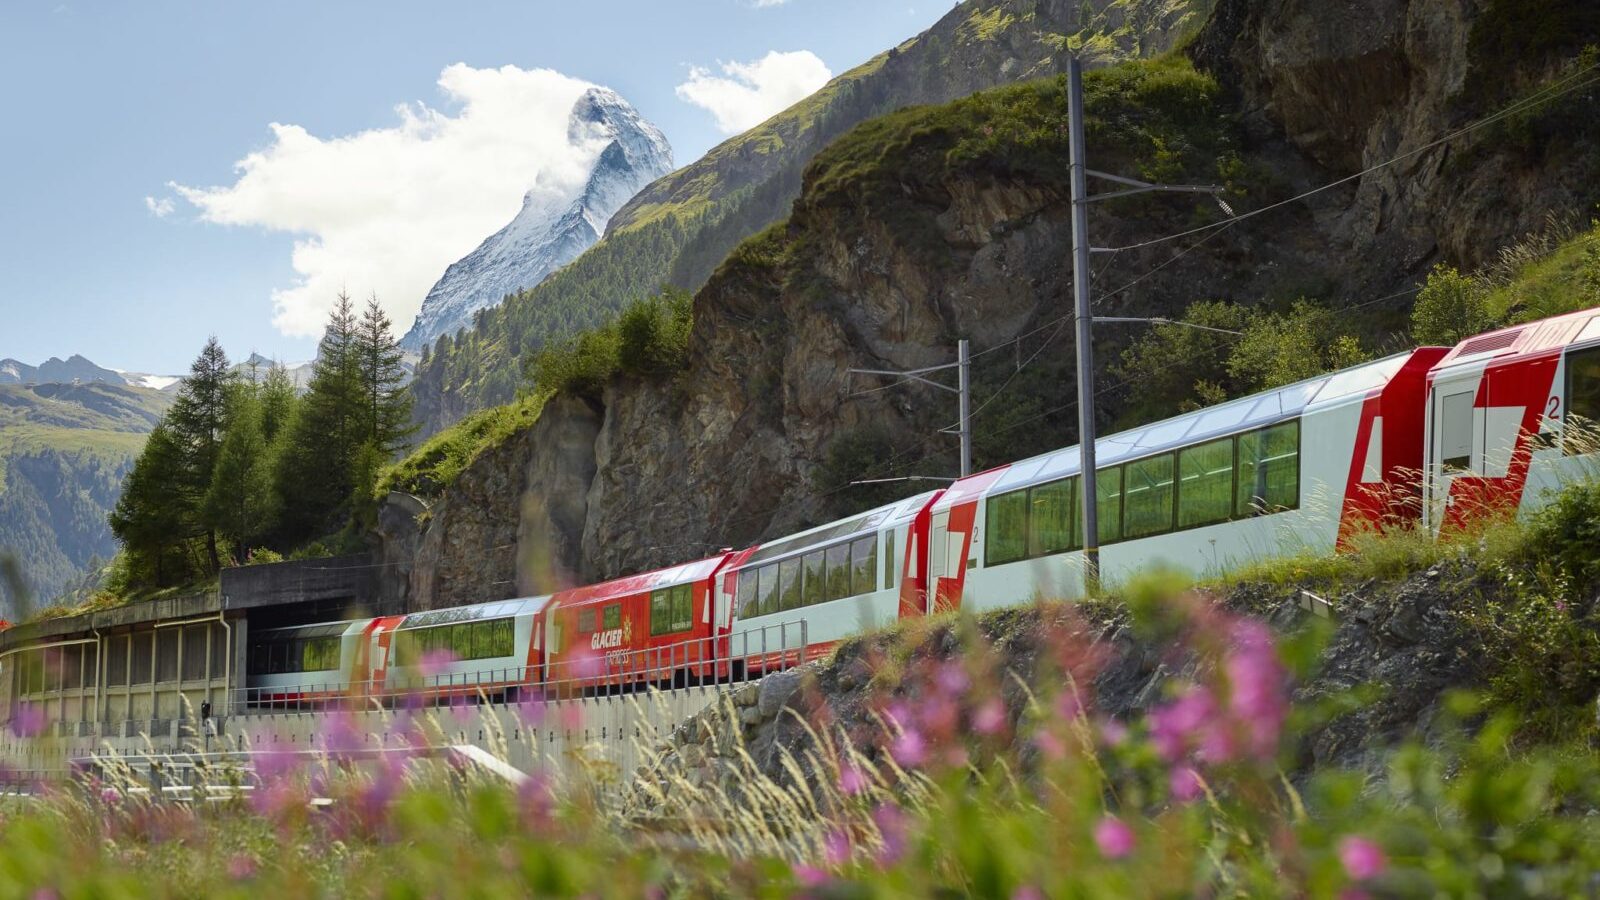 Scenic train trip image from the Glacier Express